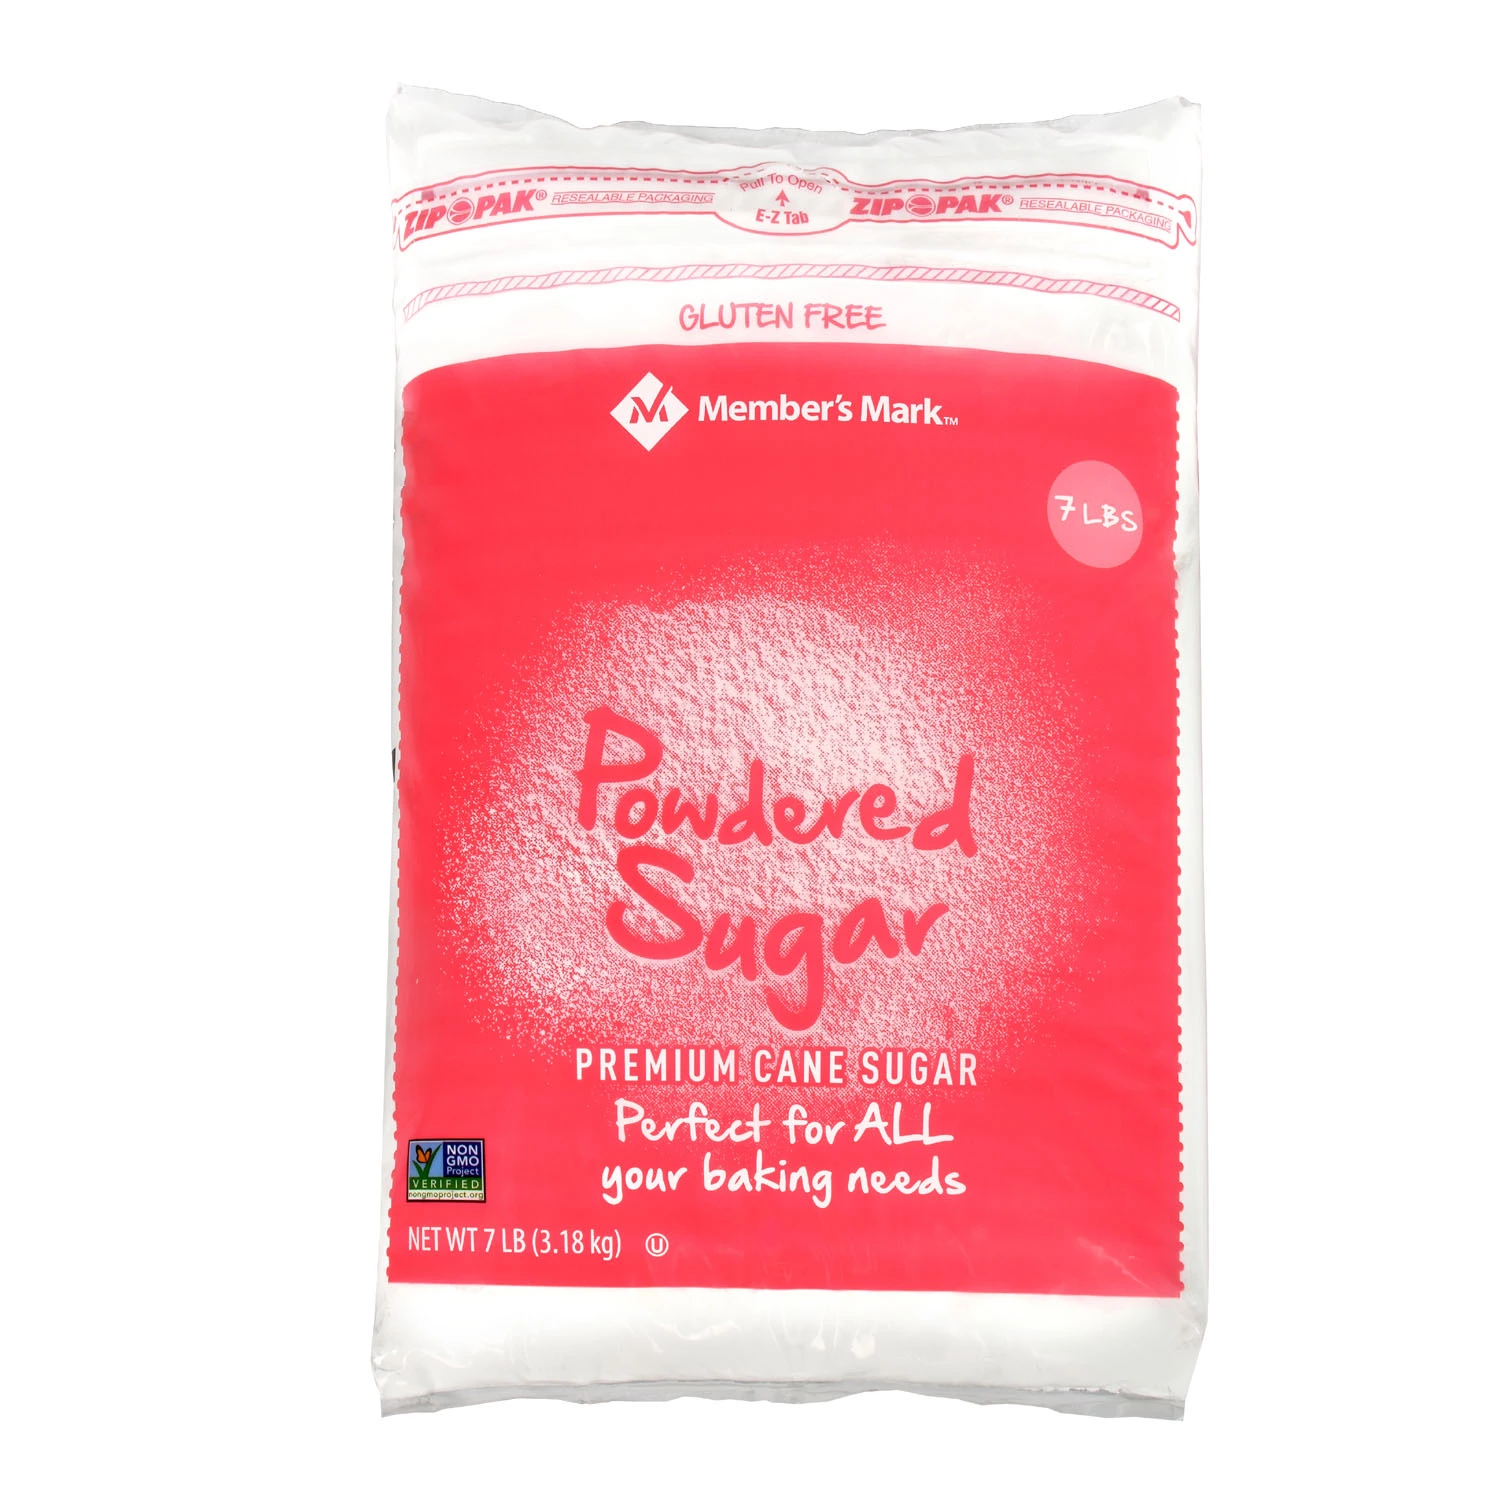 Member's Mark Powdered Sugar